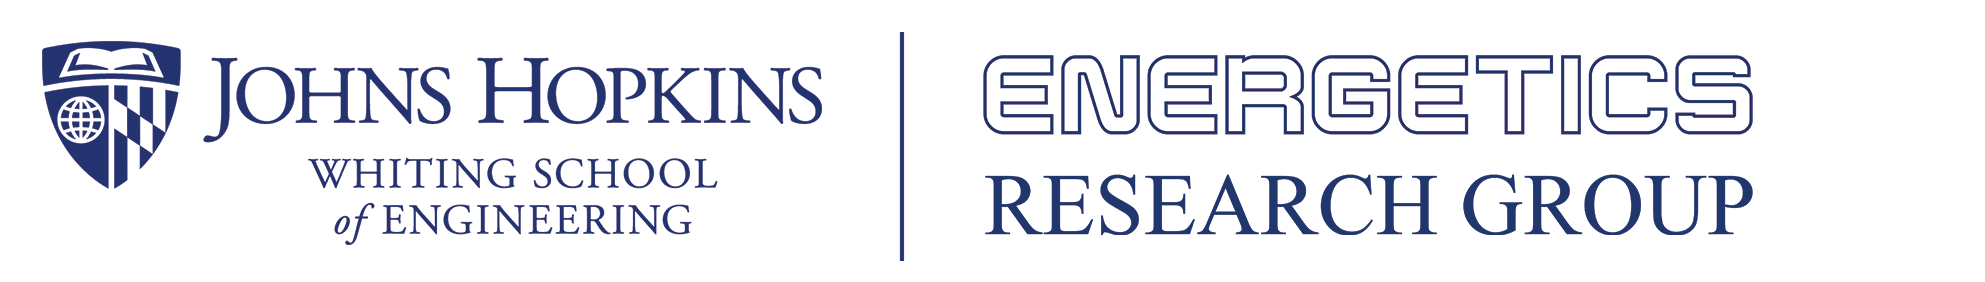 Johns Hopkins University Whiting School of Engineering Energetics Research Group Logo